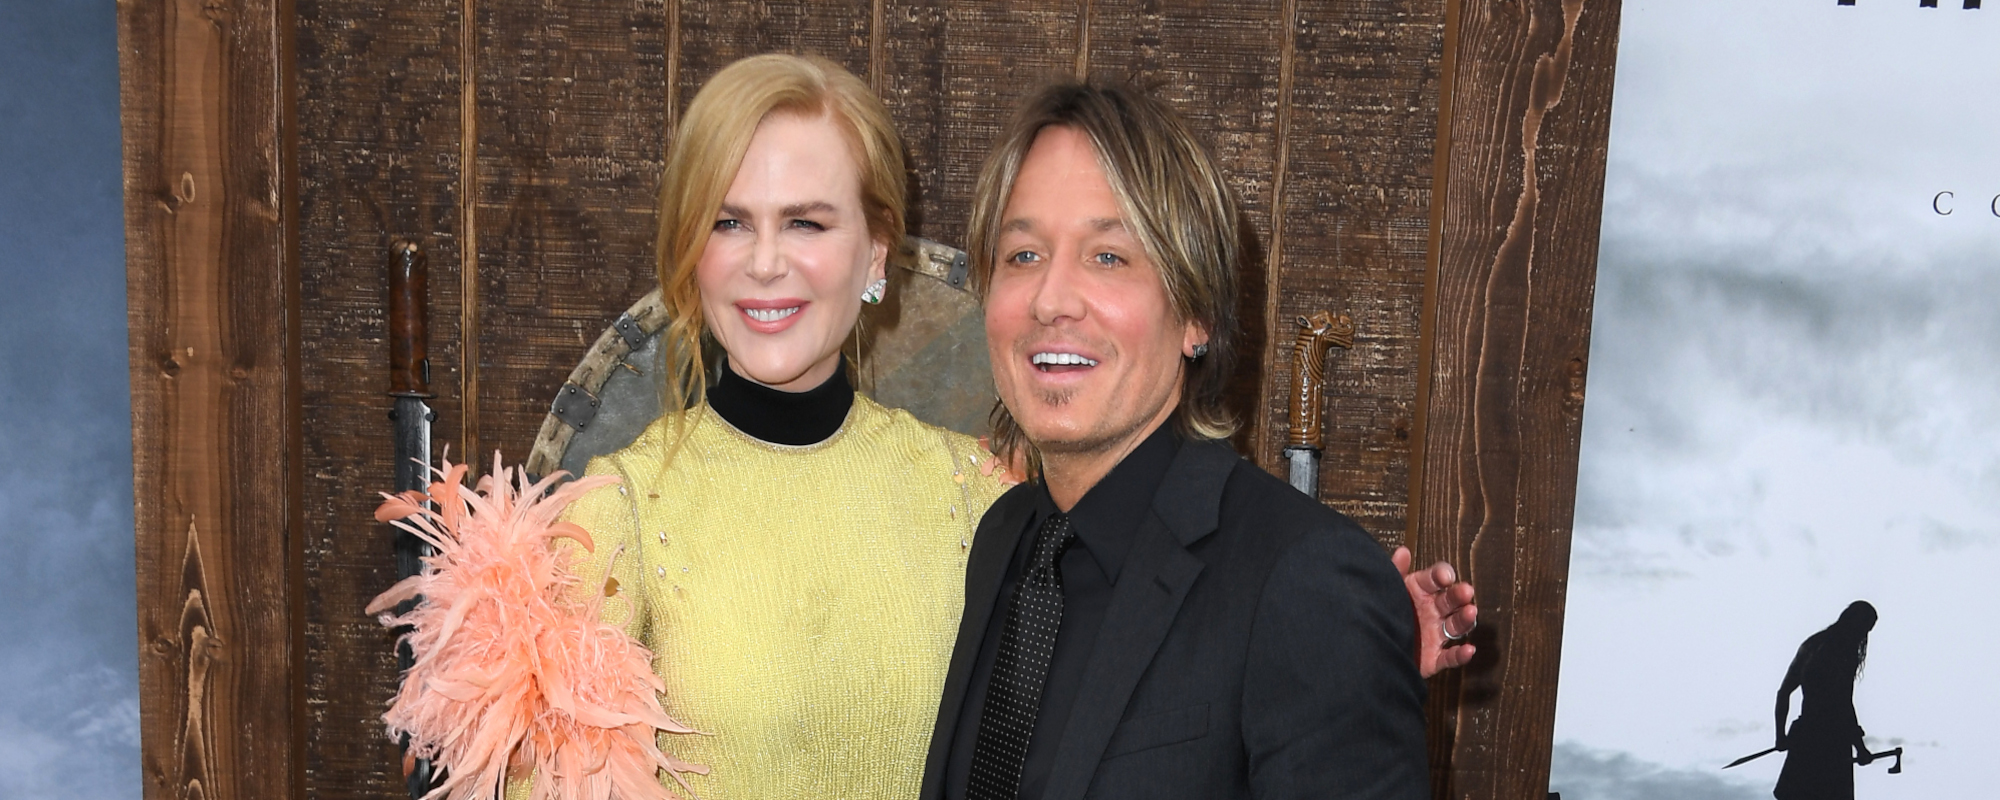 Keith Urban and Nicole Kidman Celebrate 16th Wedding Anniversary—”Happy Sweet 16 Baby”